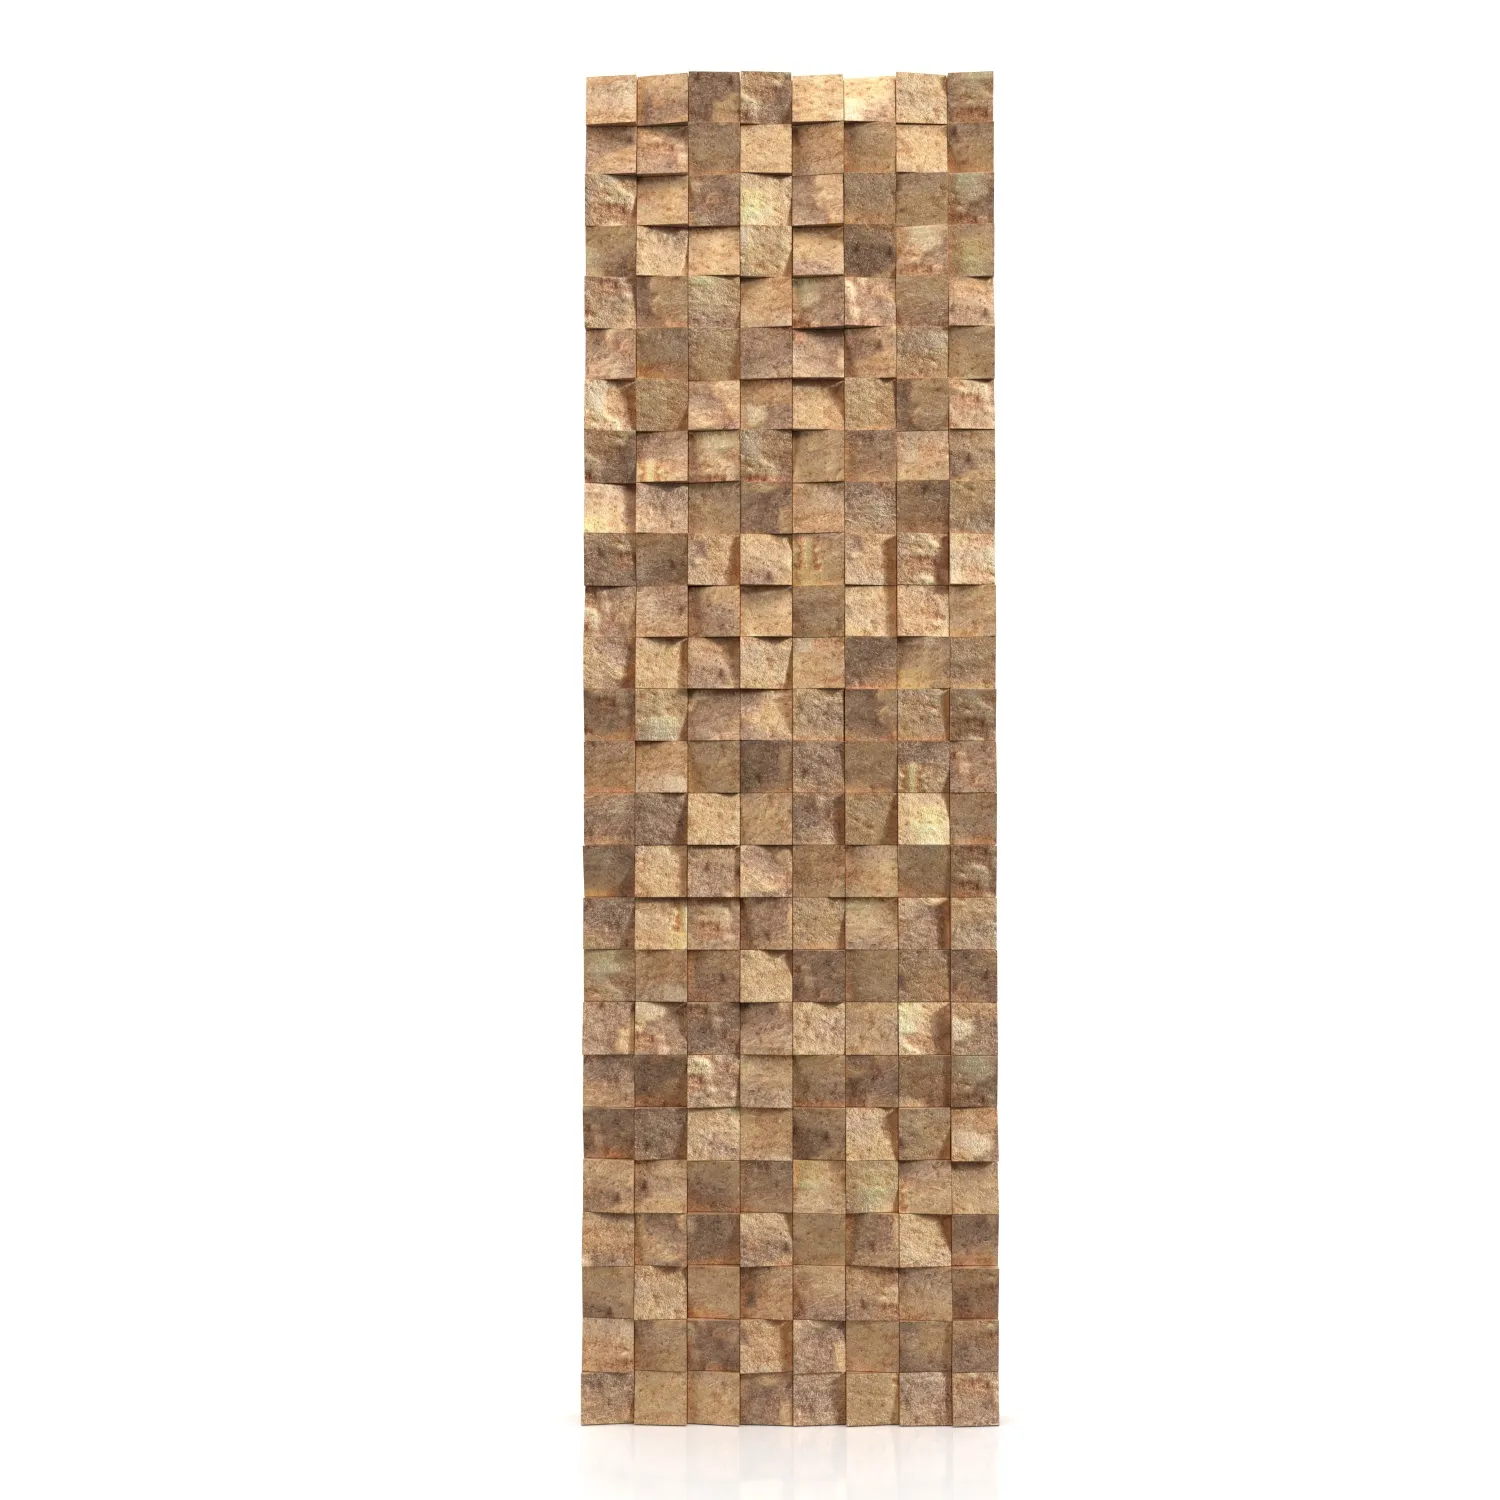 Textured 2 72w Metallic Rugged Wooden Blocks Metal Wall Art PBR 3D Model_01